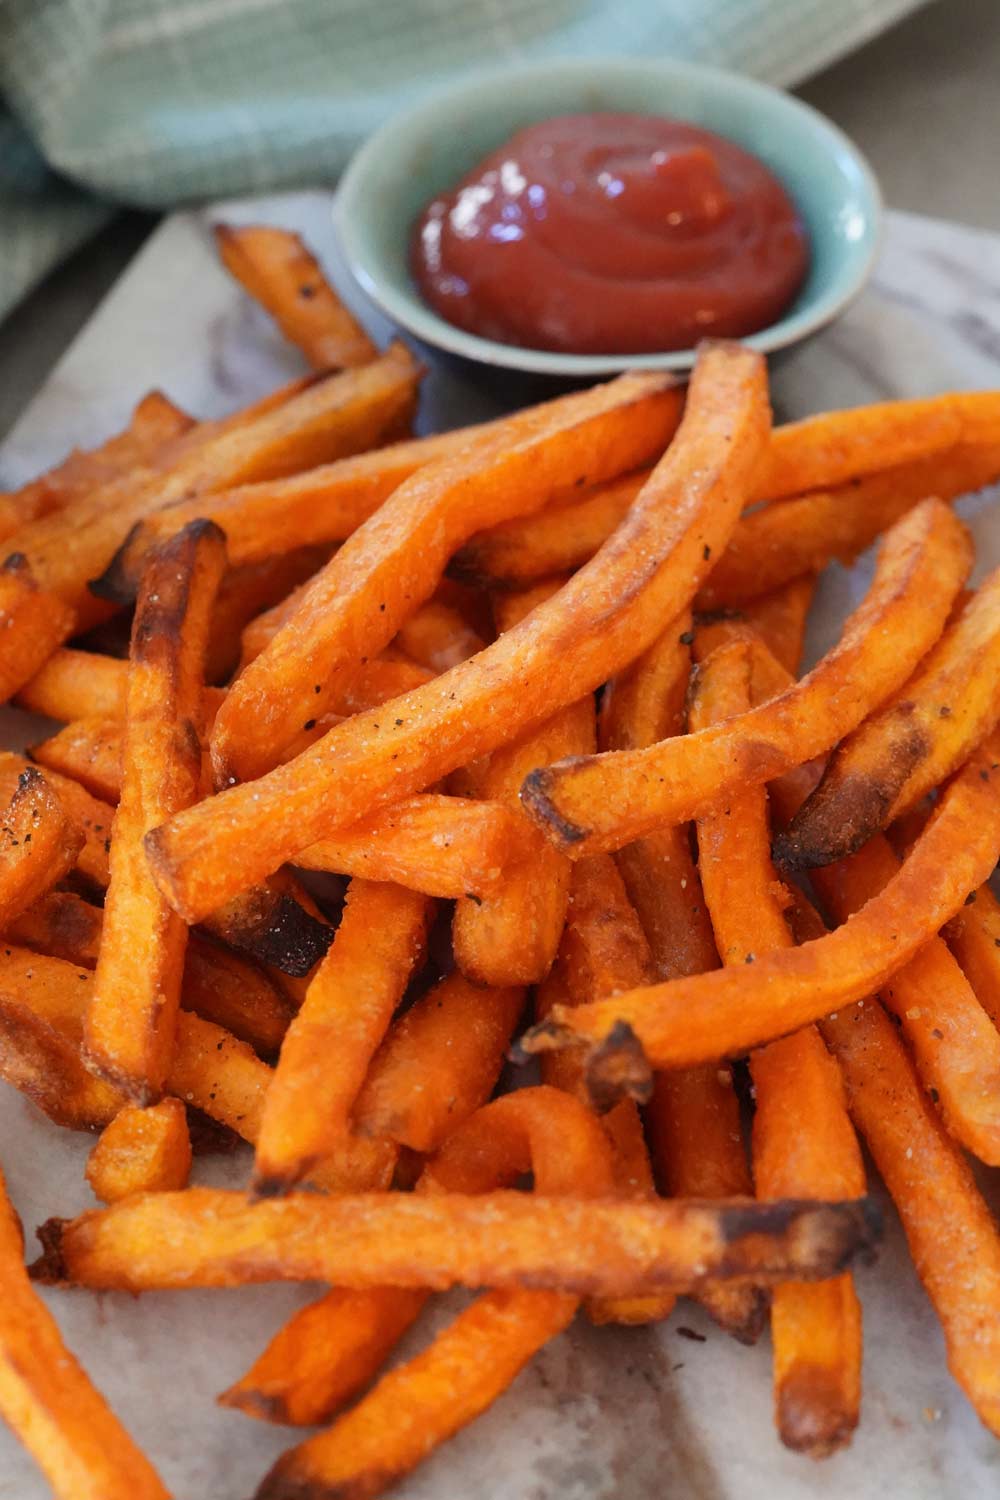 A plate of sweet potato fries